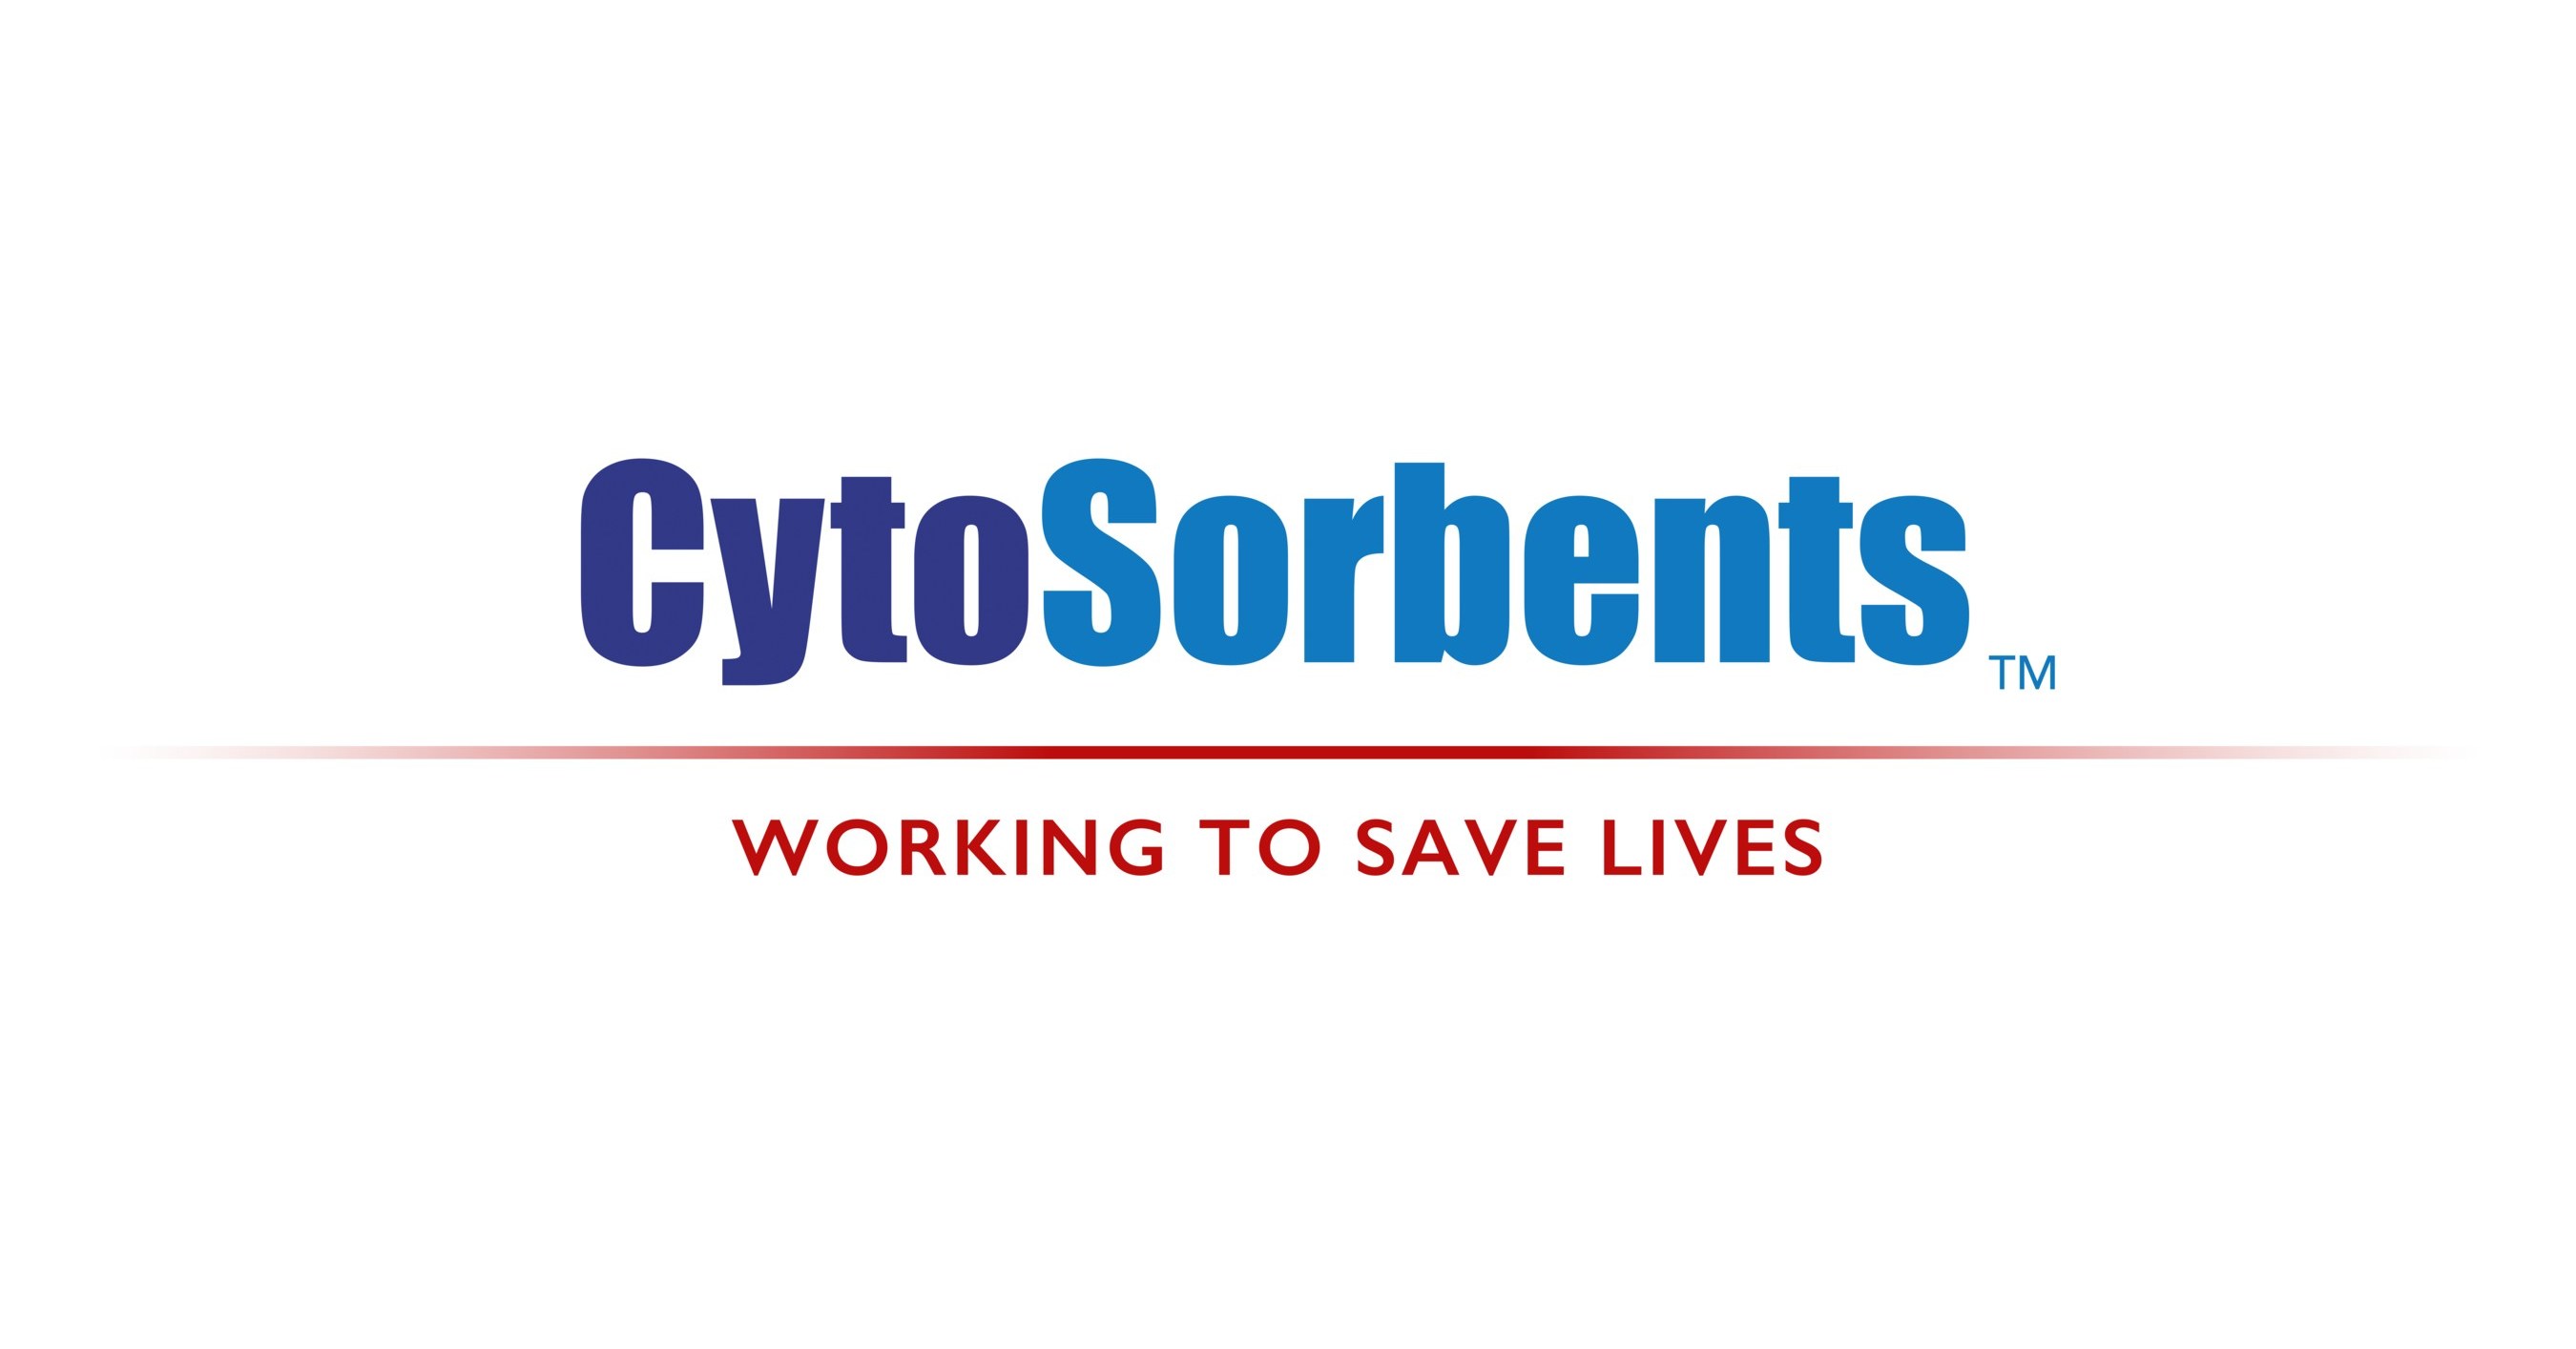 CytoSorbents Working To Save Lives Logo jpg?p=facebook.